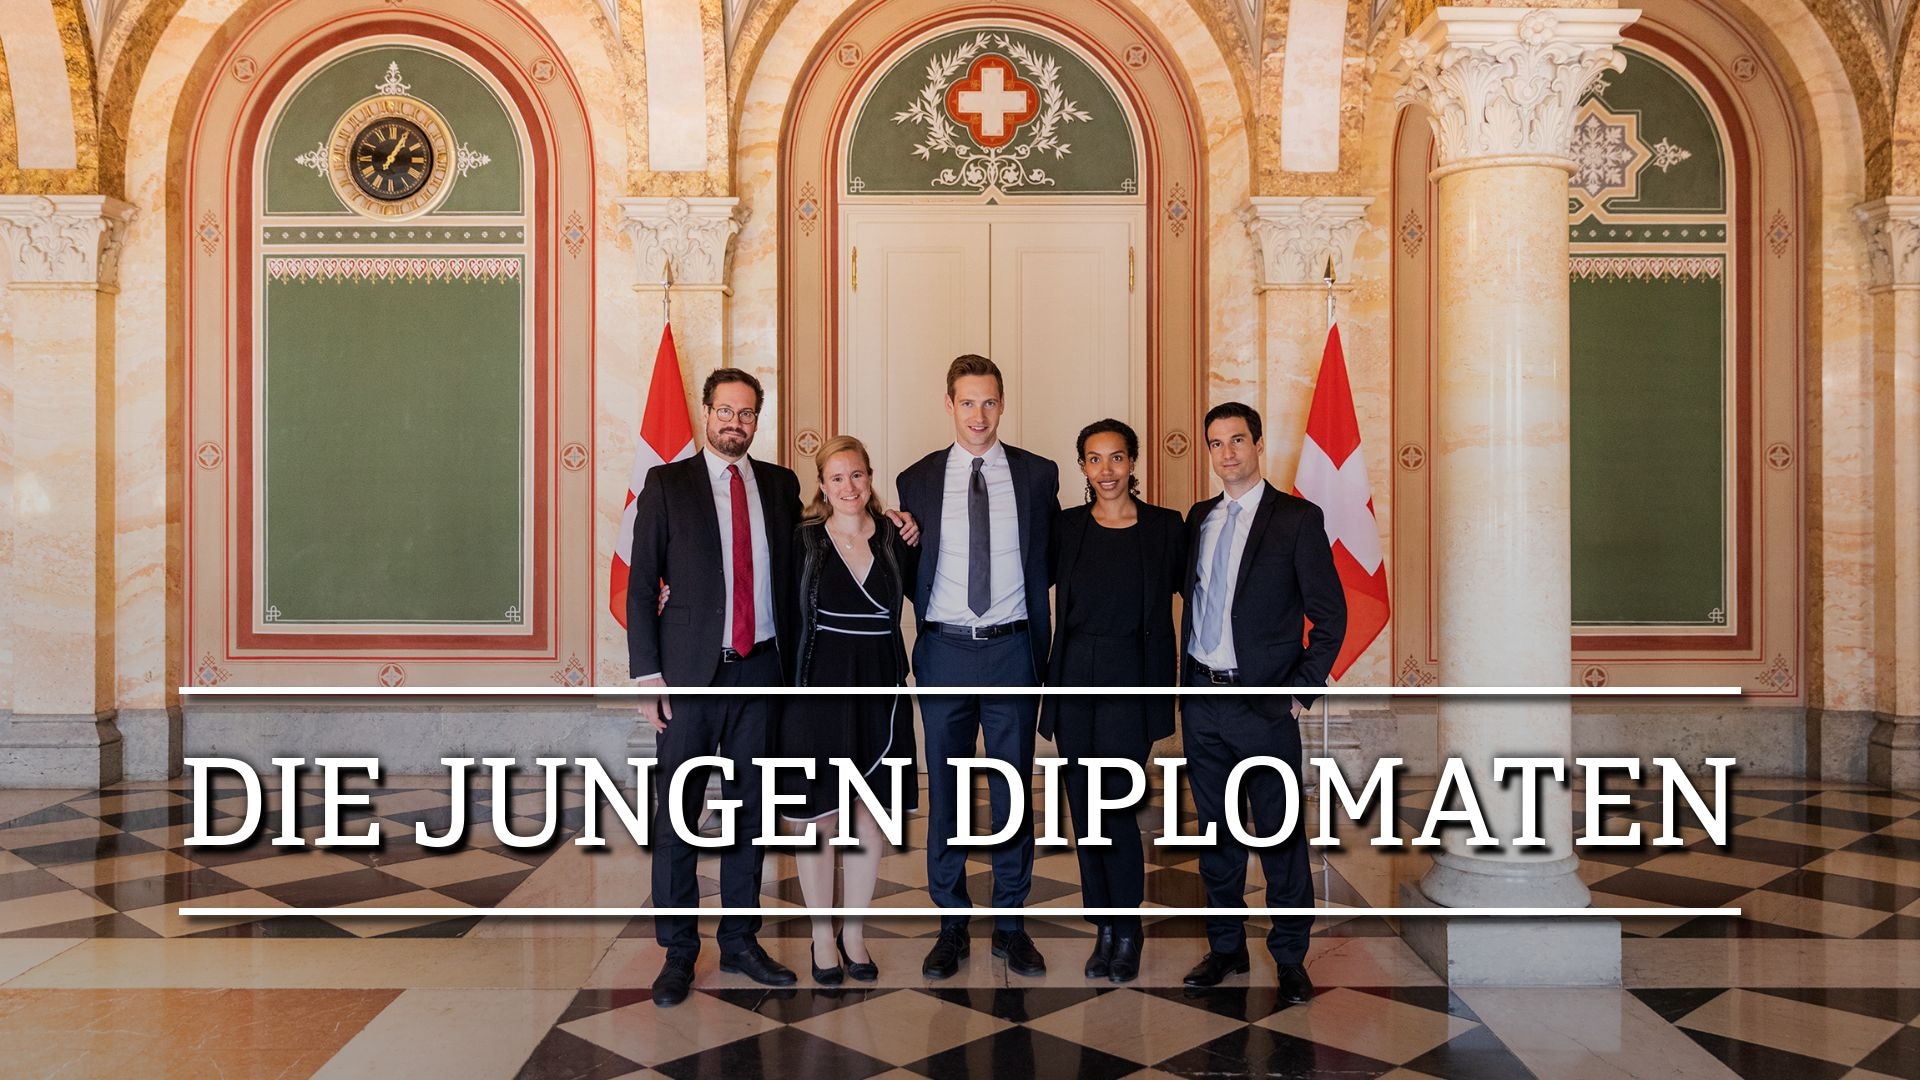 Die jungen Diplomaten